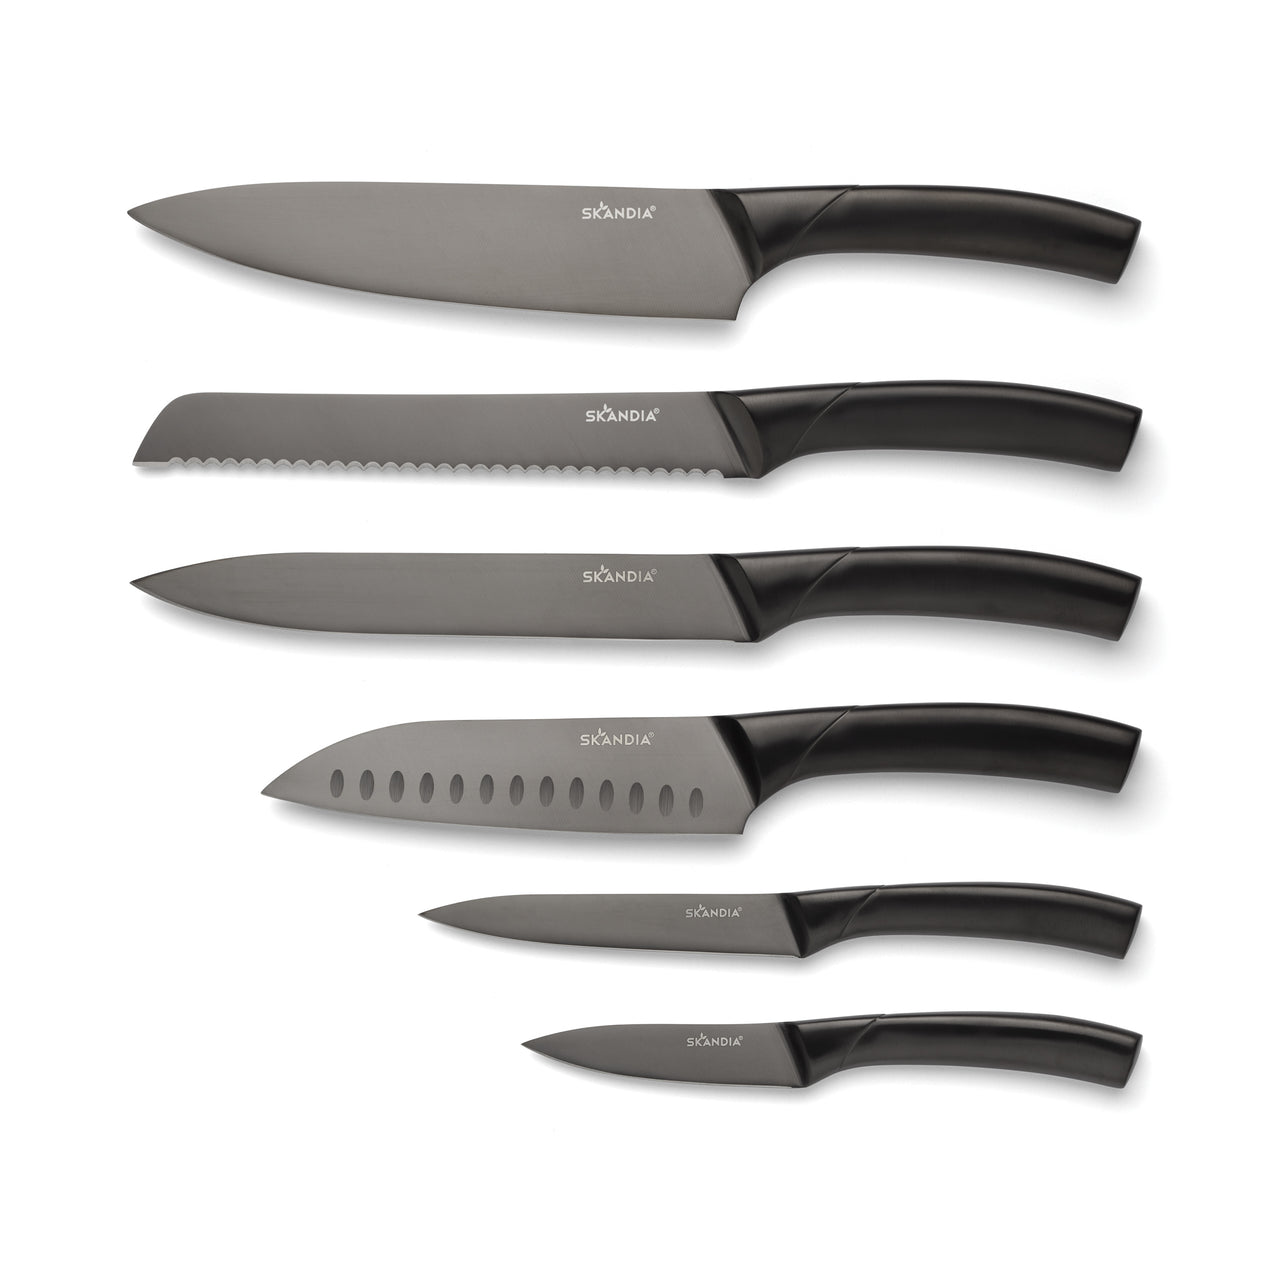 Skandia 5-piece Cutlery Set with Blade Guards